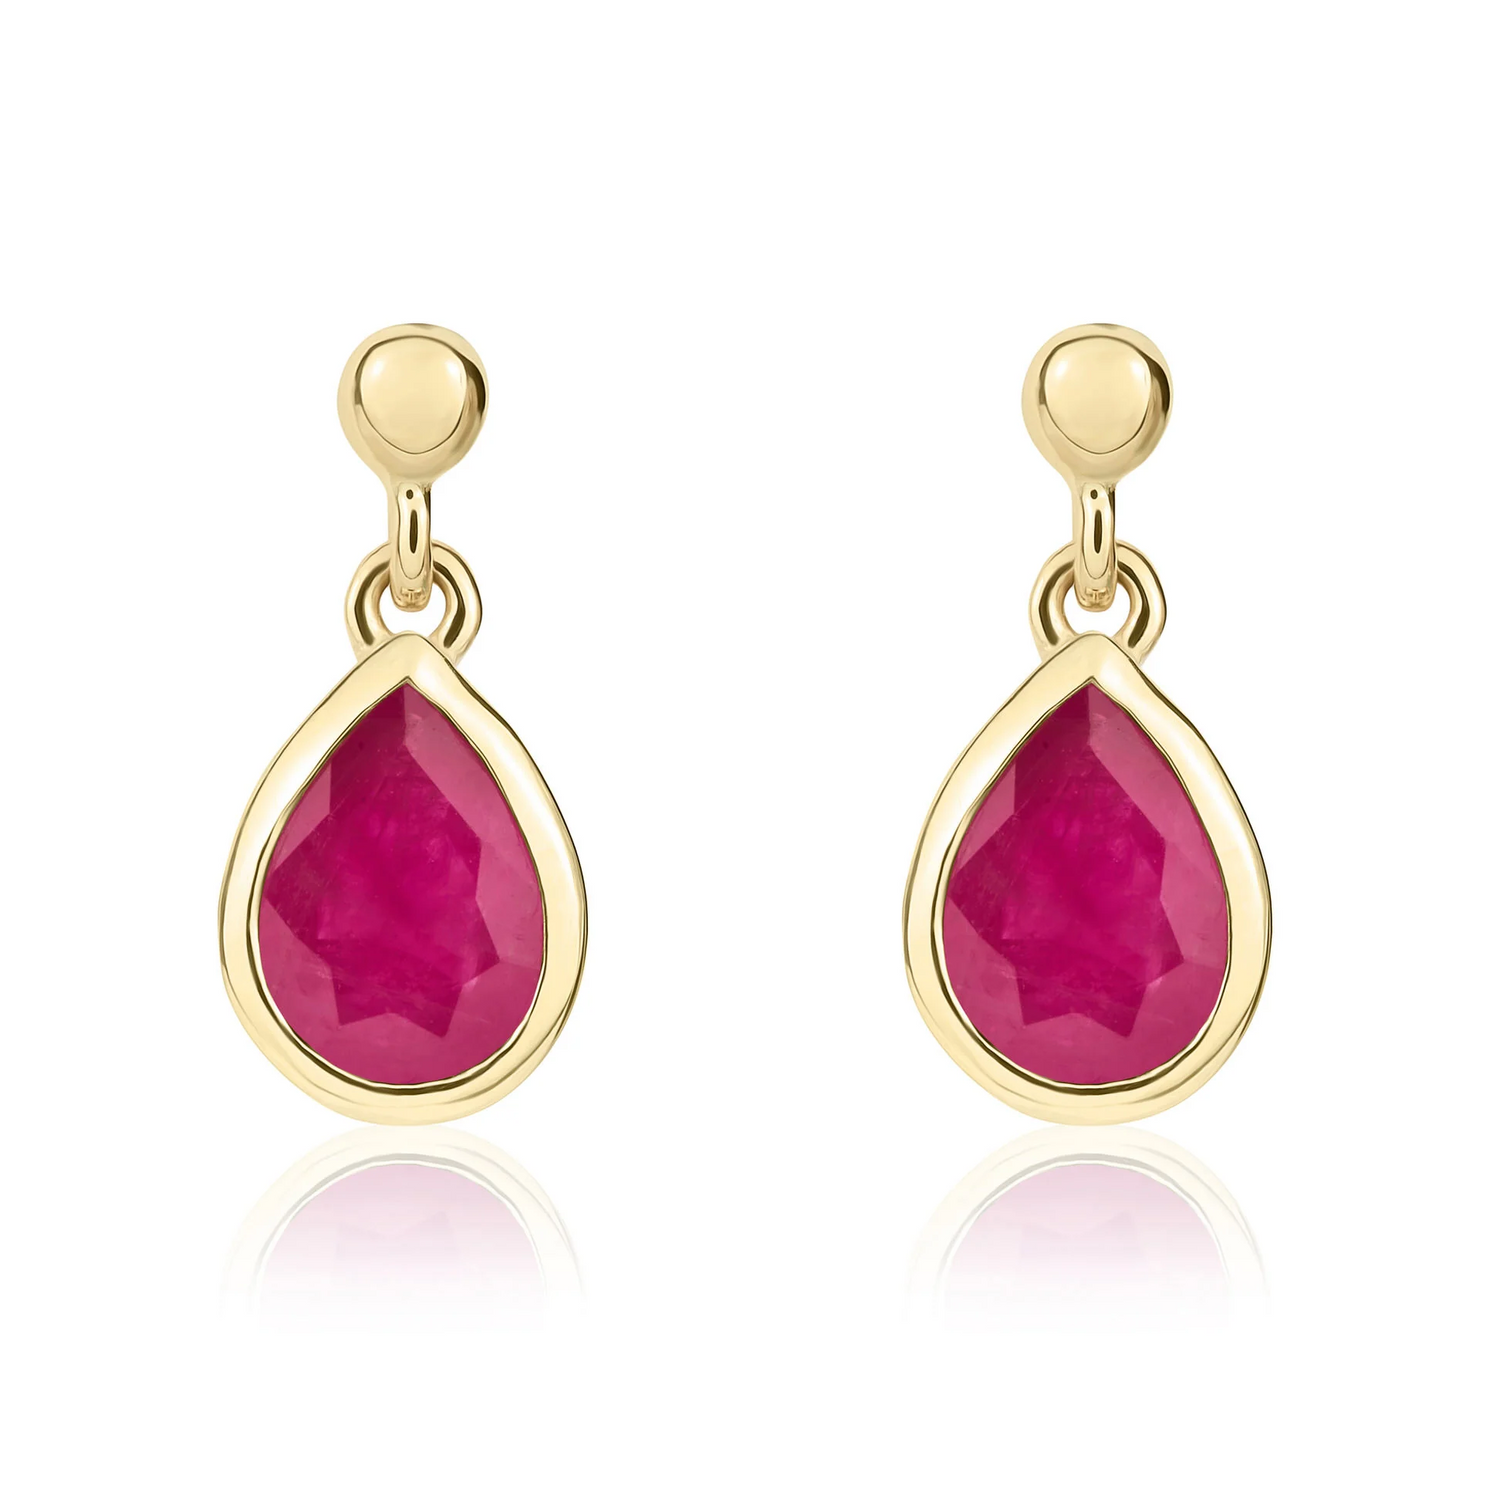 9CT Yellow Gold Pear Shaped Ruby Drop Earrings (7x5mm)